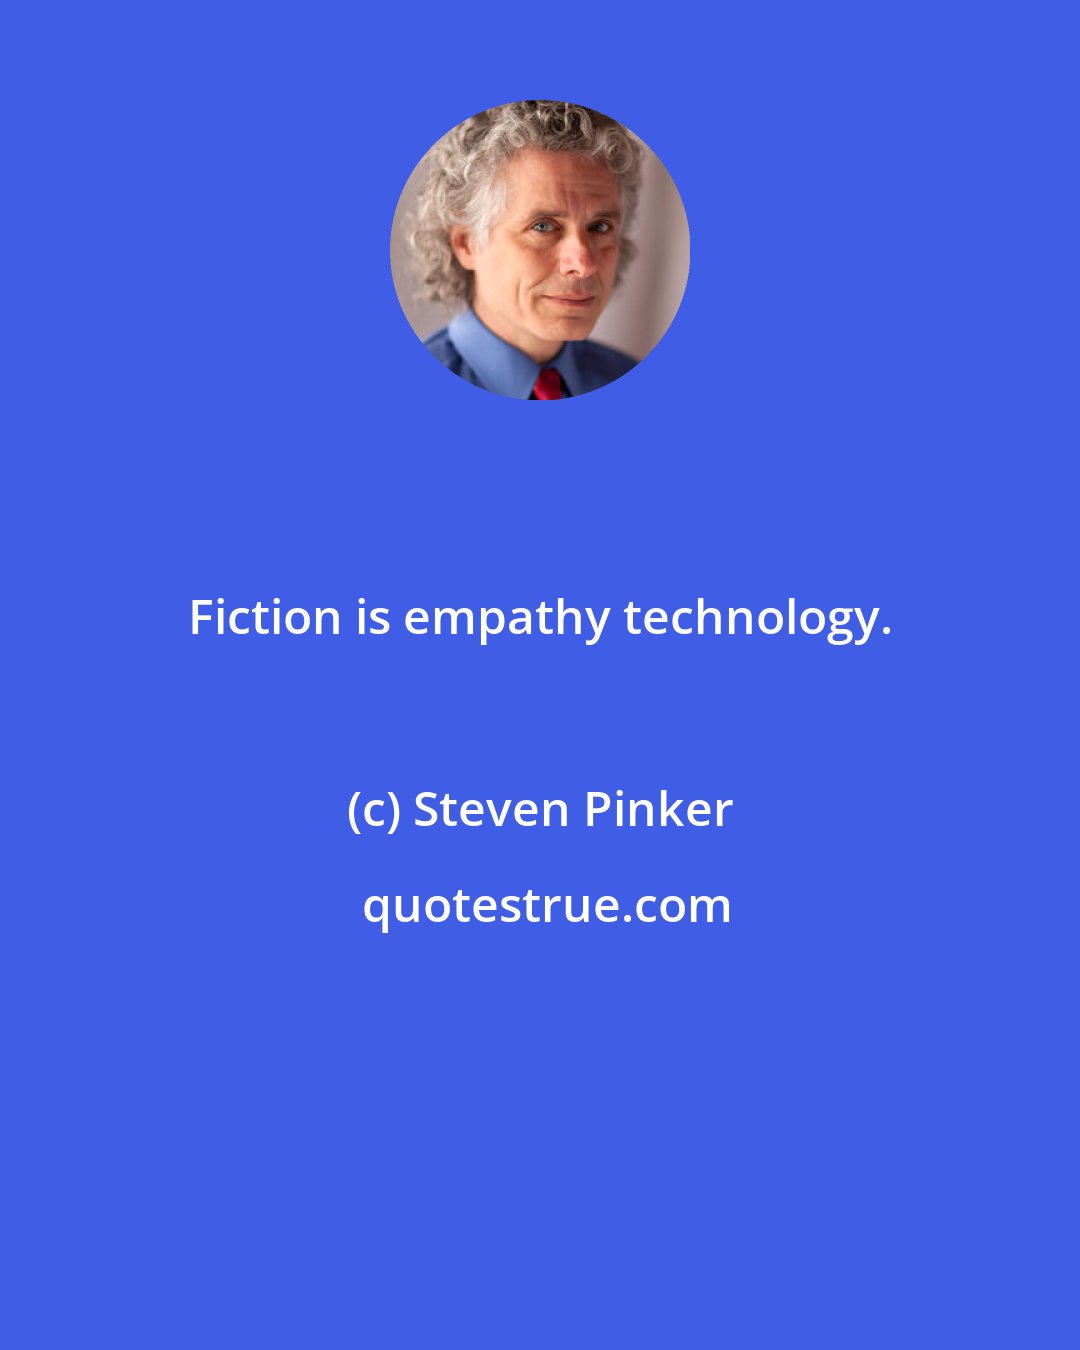 Steven Pinker: Fiction is empathy technology.